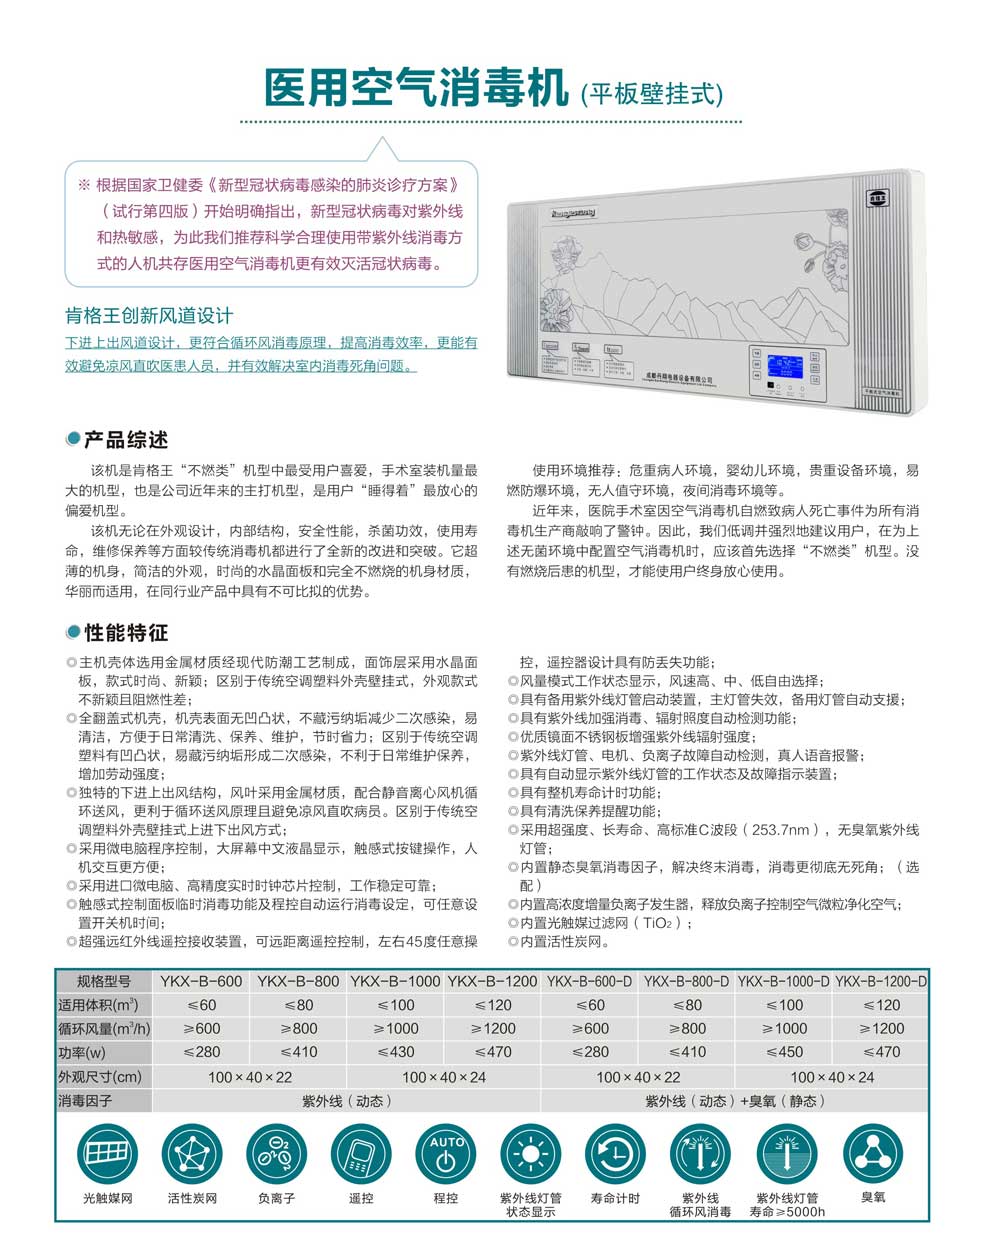 YKX-B系平板壁挂式消毒机--彩页.jpg